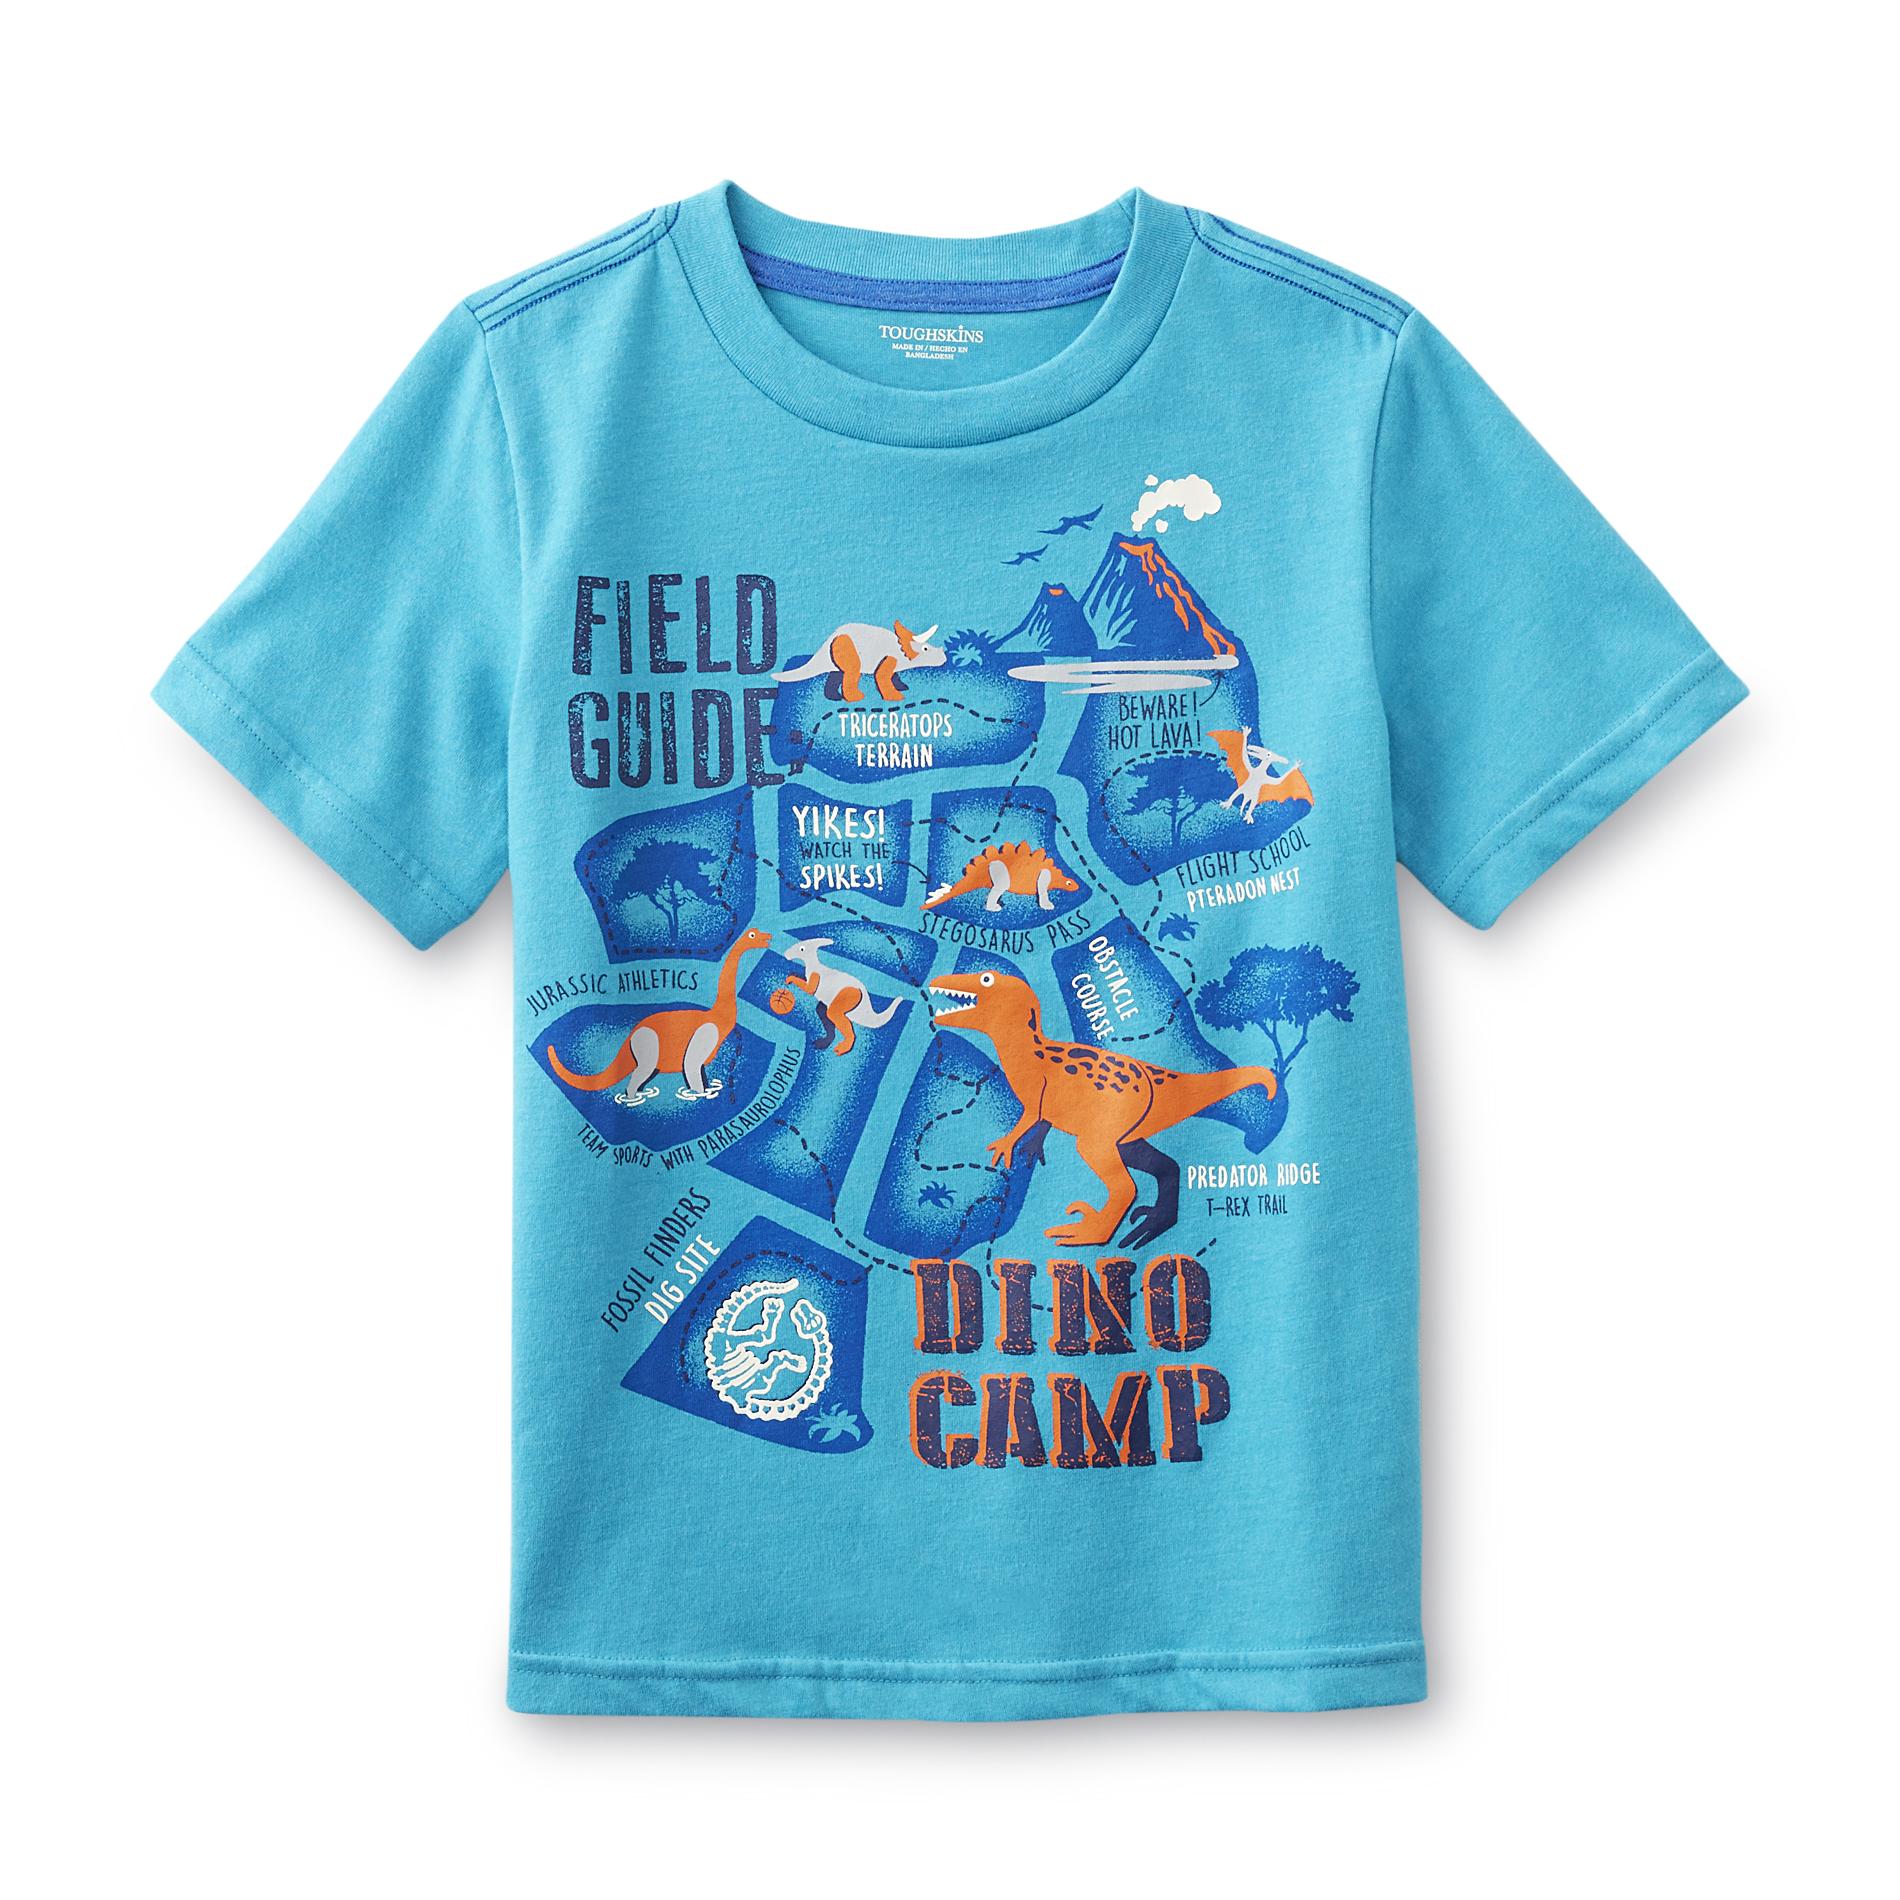 Boy's Graphic T-Shirt - Dino Camp